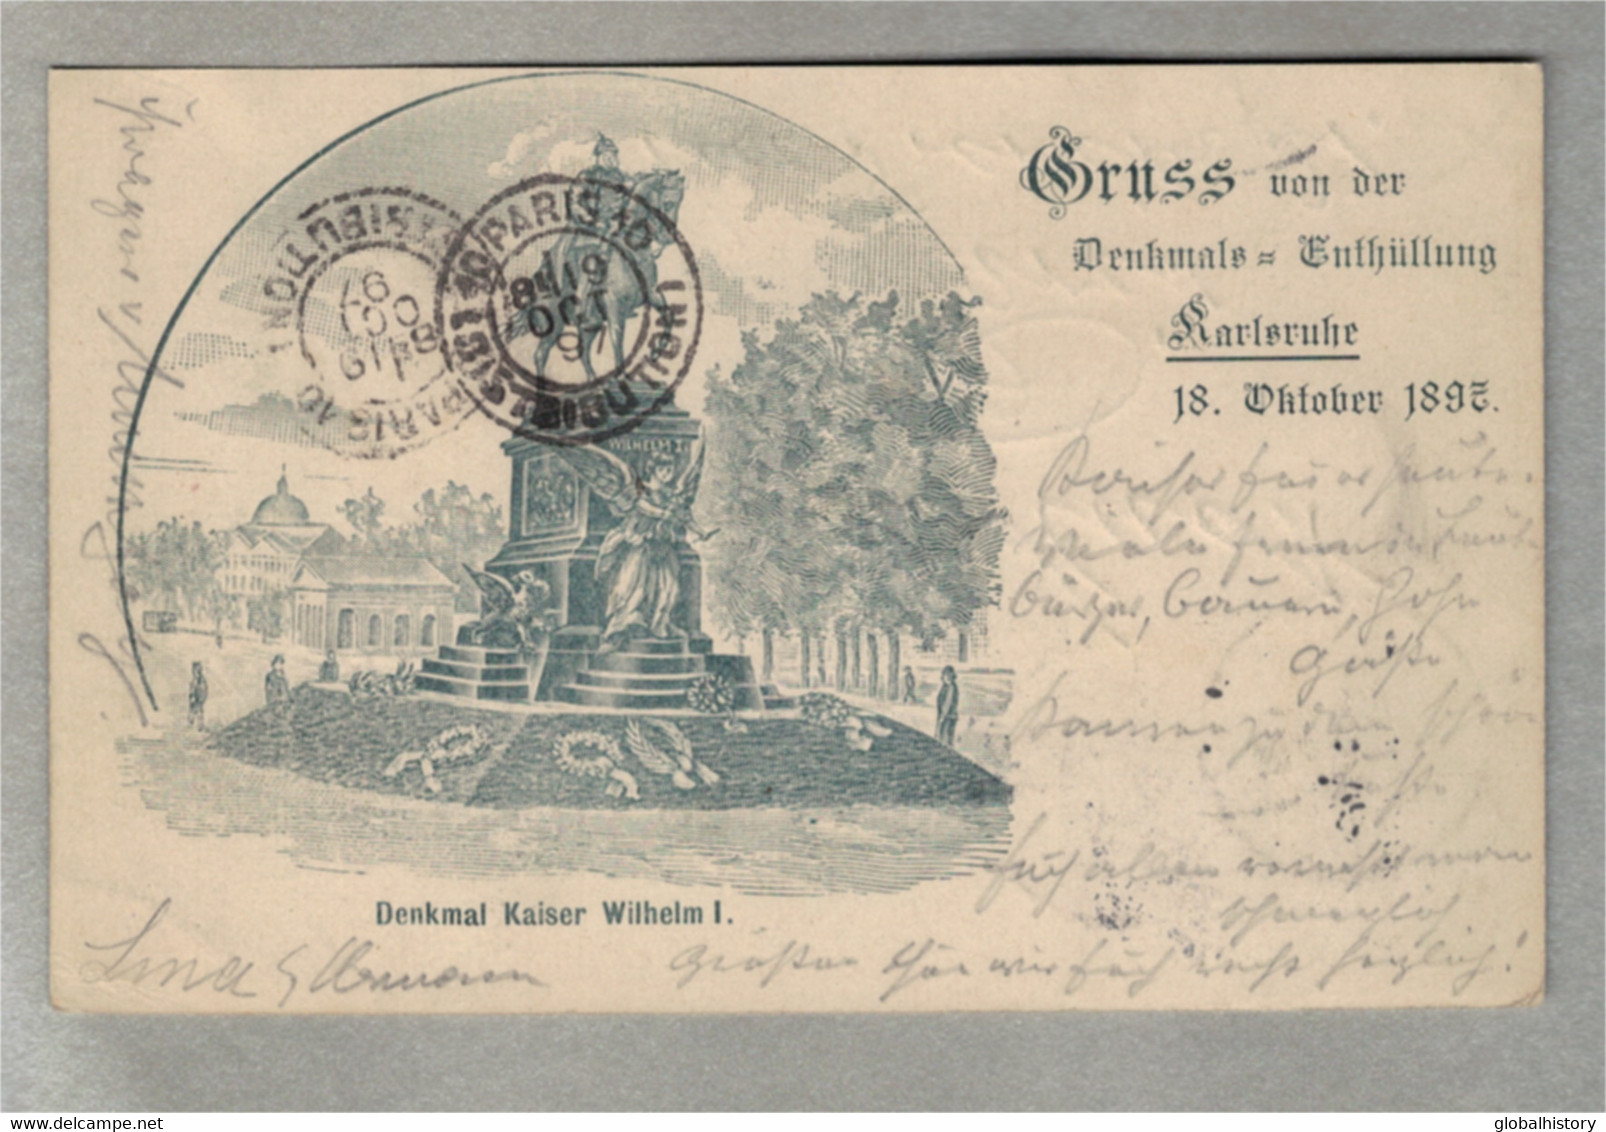 DG1416 - KARLSRUHE 1897 ENDHÜLLUNG - DENKMAL KAISER WILHELM - Karlsruhe